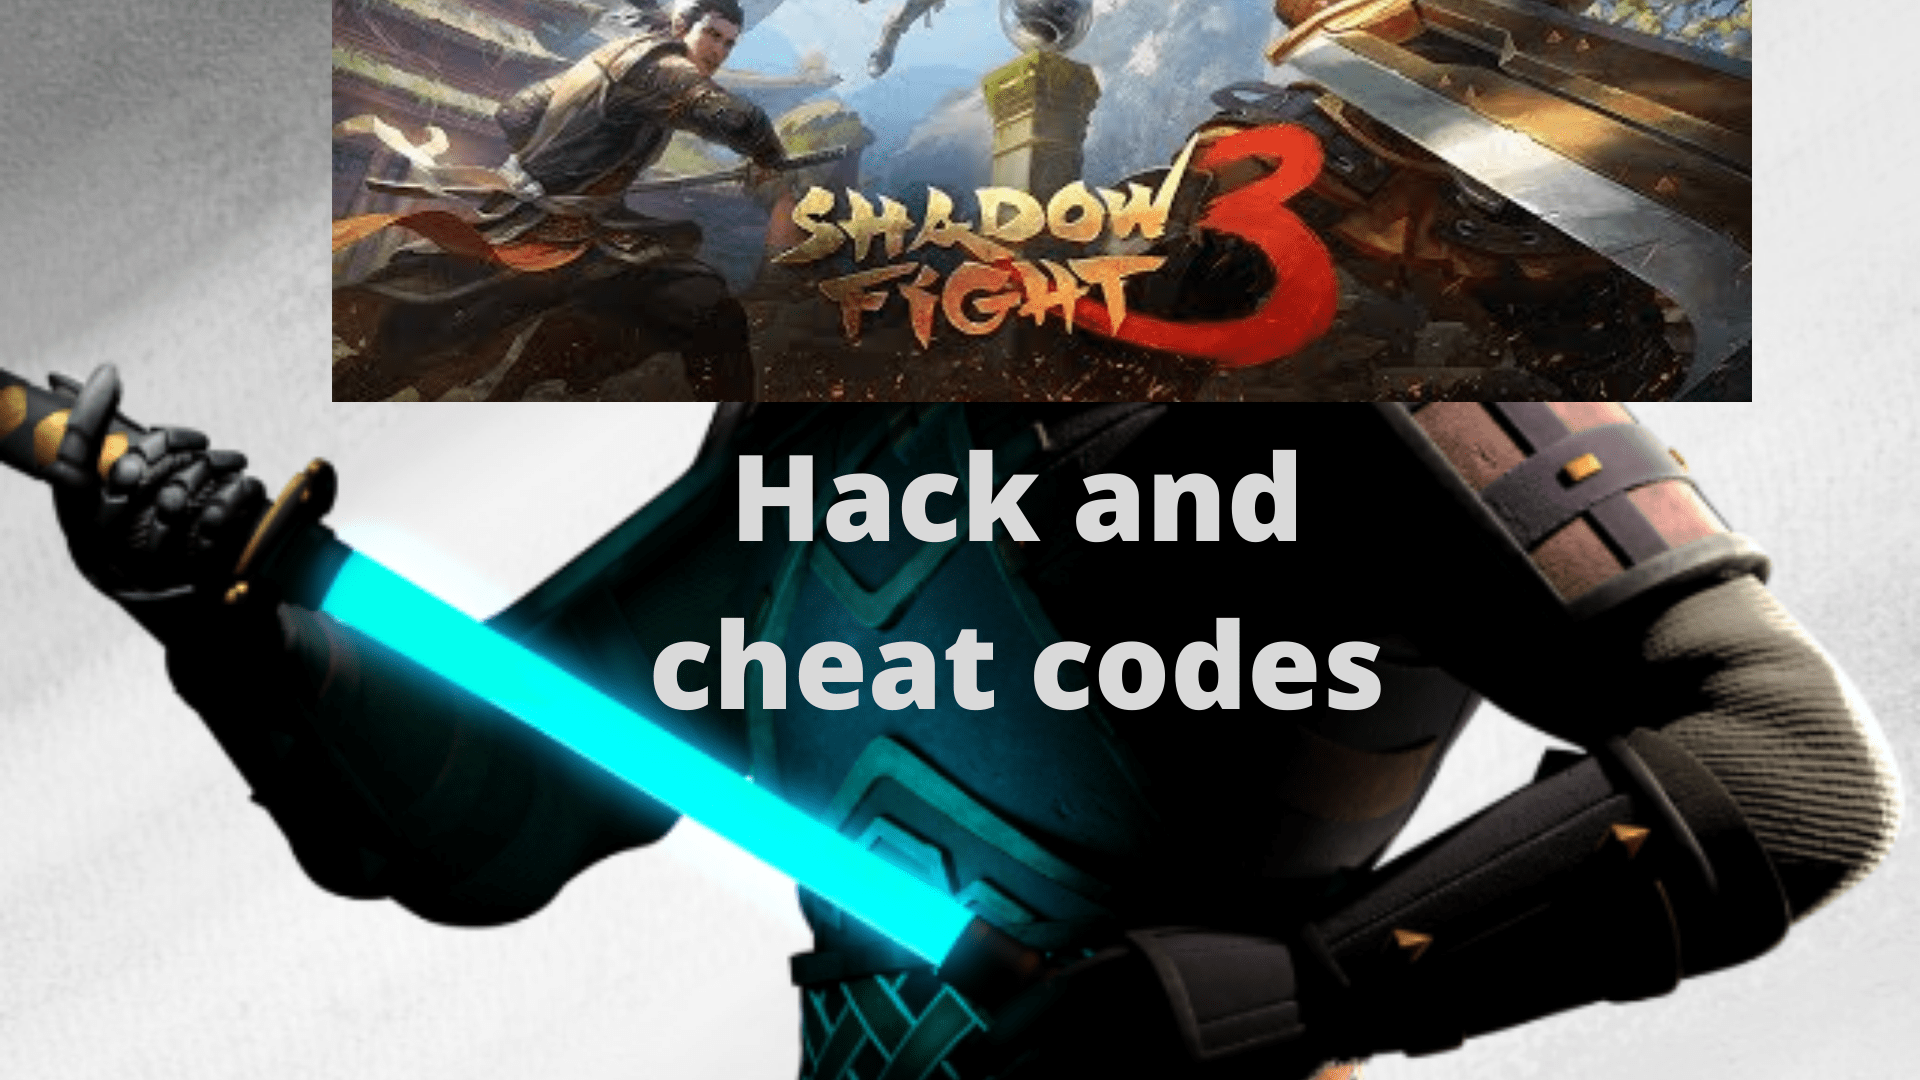 Shadow Fight 3 Hack Cheat Codes 2020 Techzimo